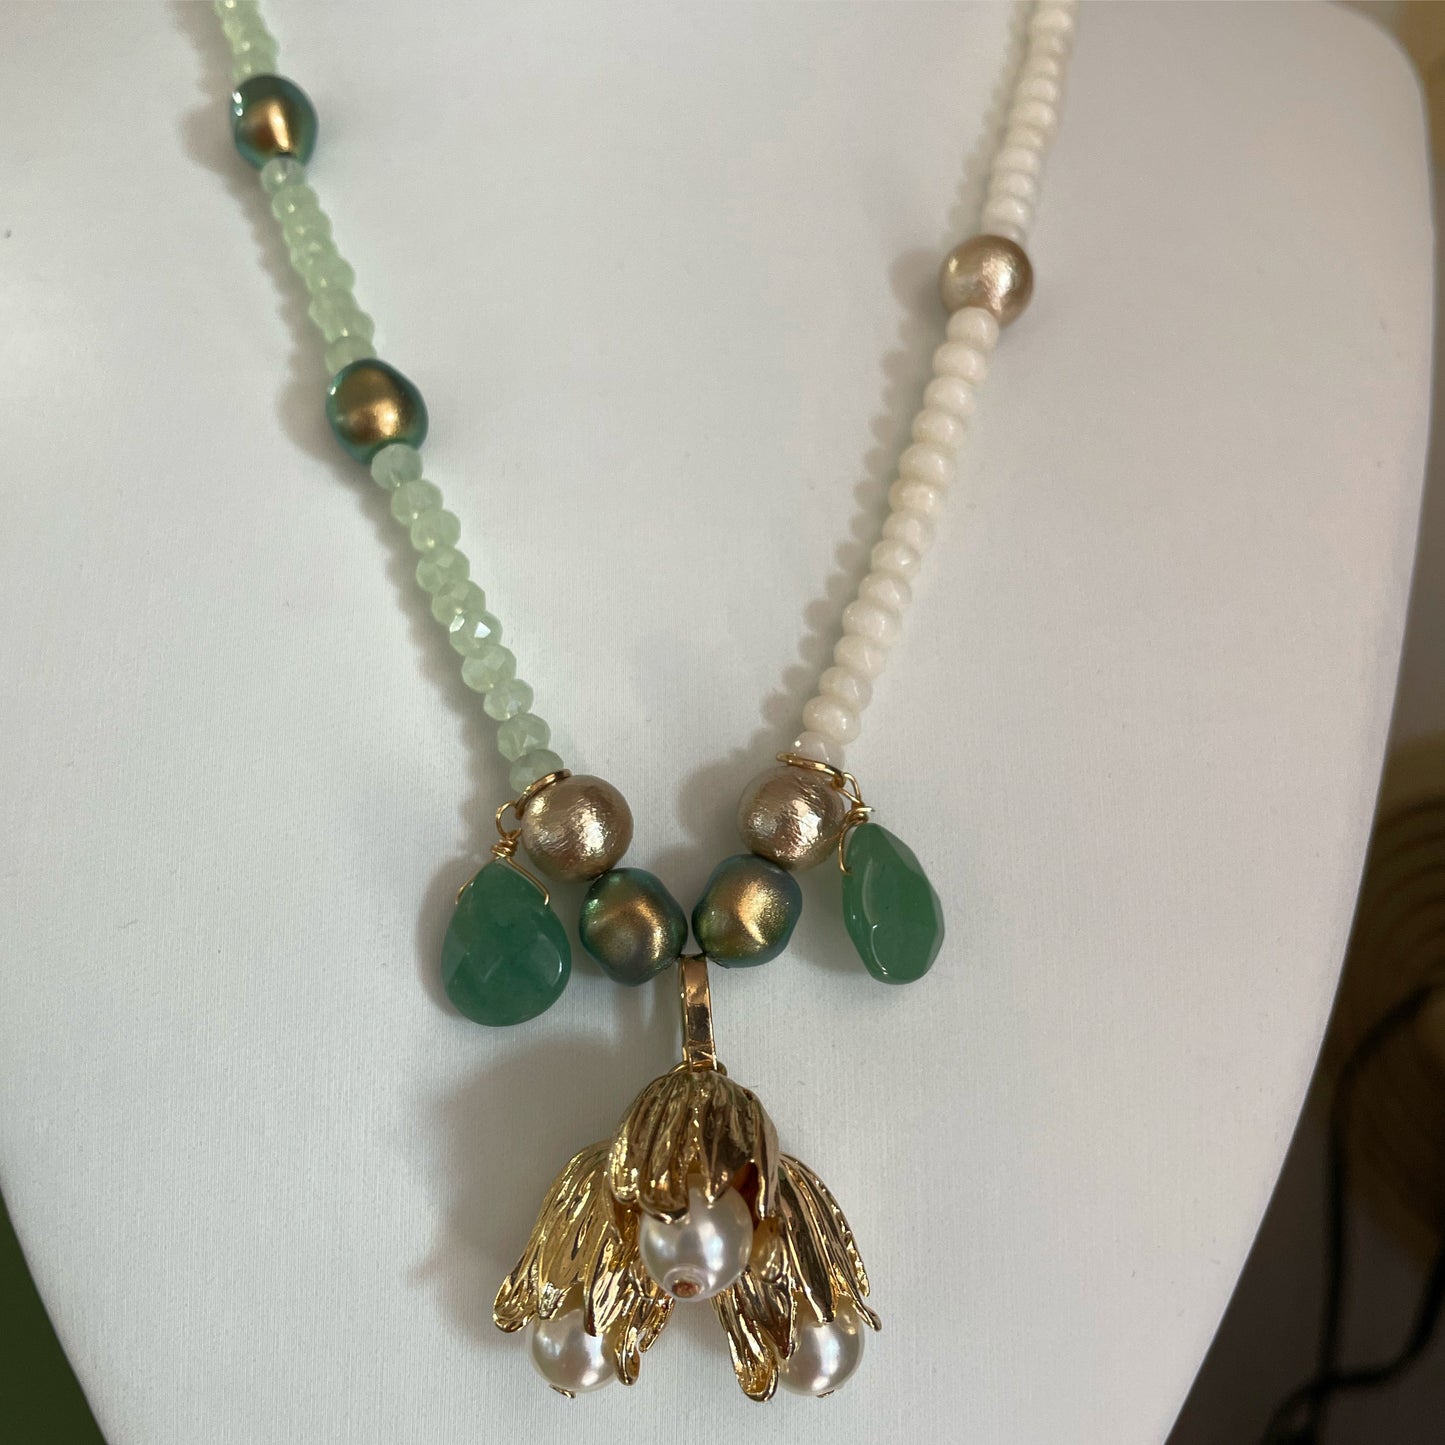 Beads lotus pendant necklace